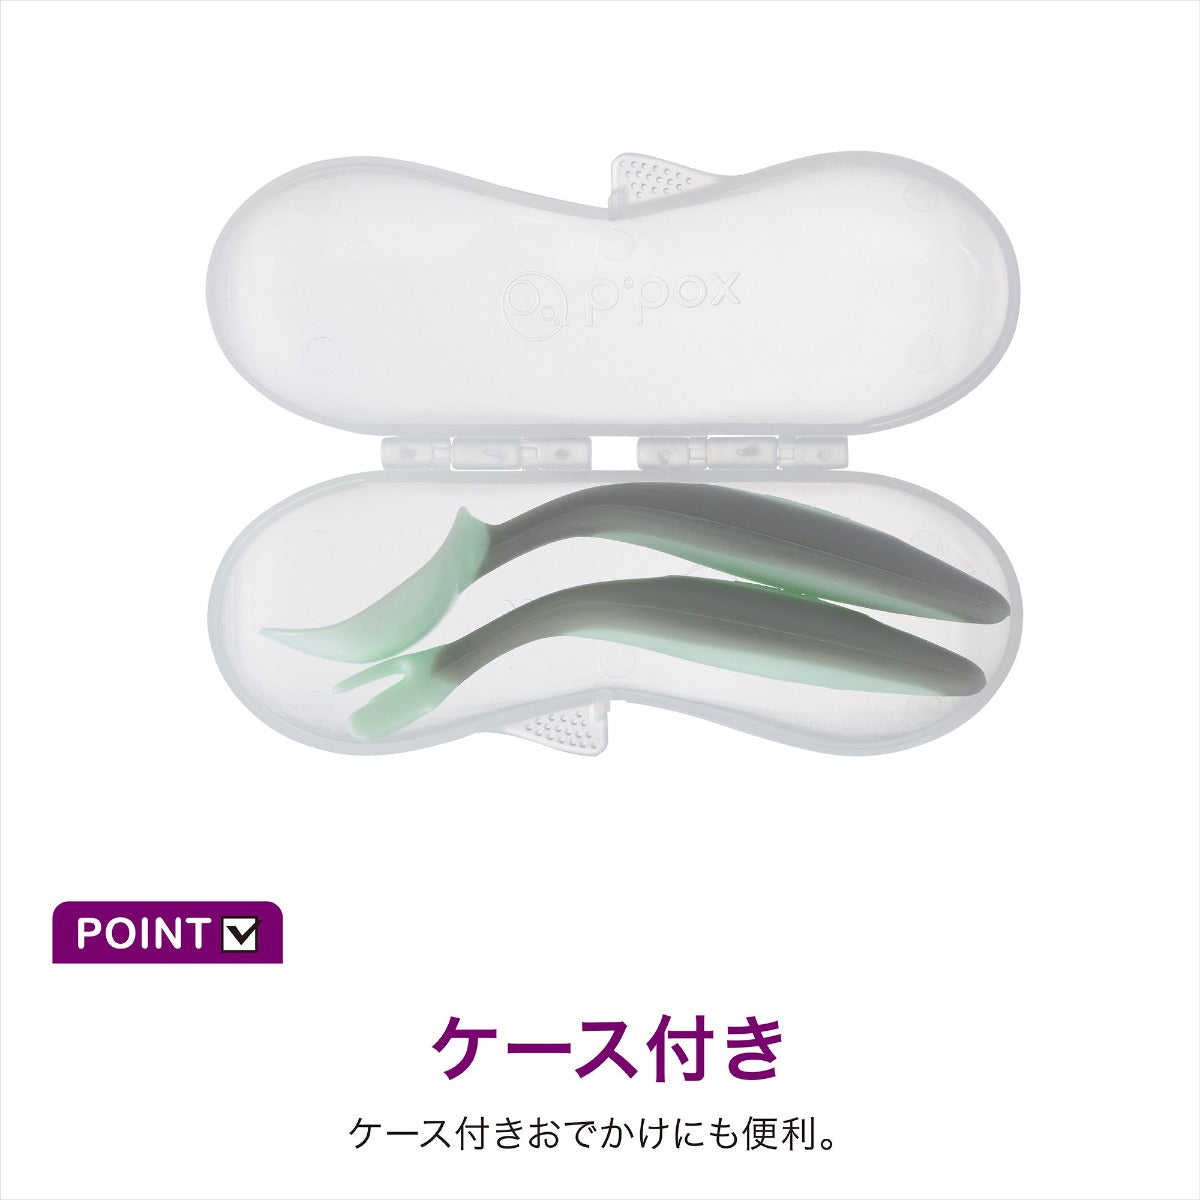 *b.box* Toddler cutlery set カトラリーセット -pistachio - b.box Japan